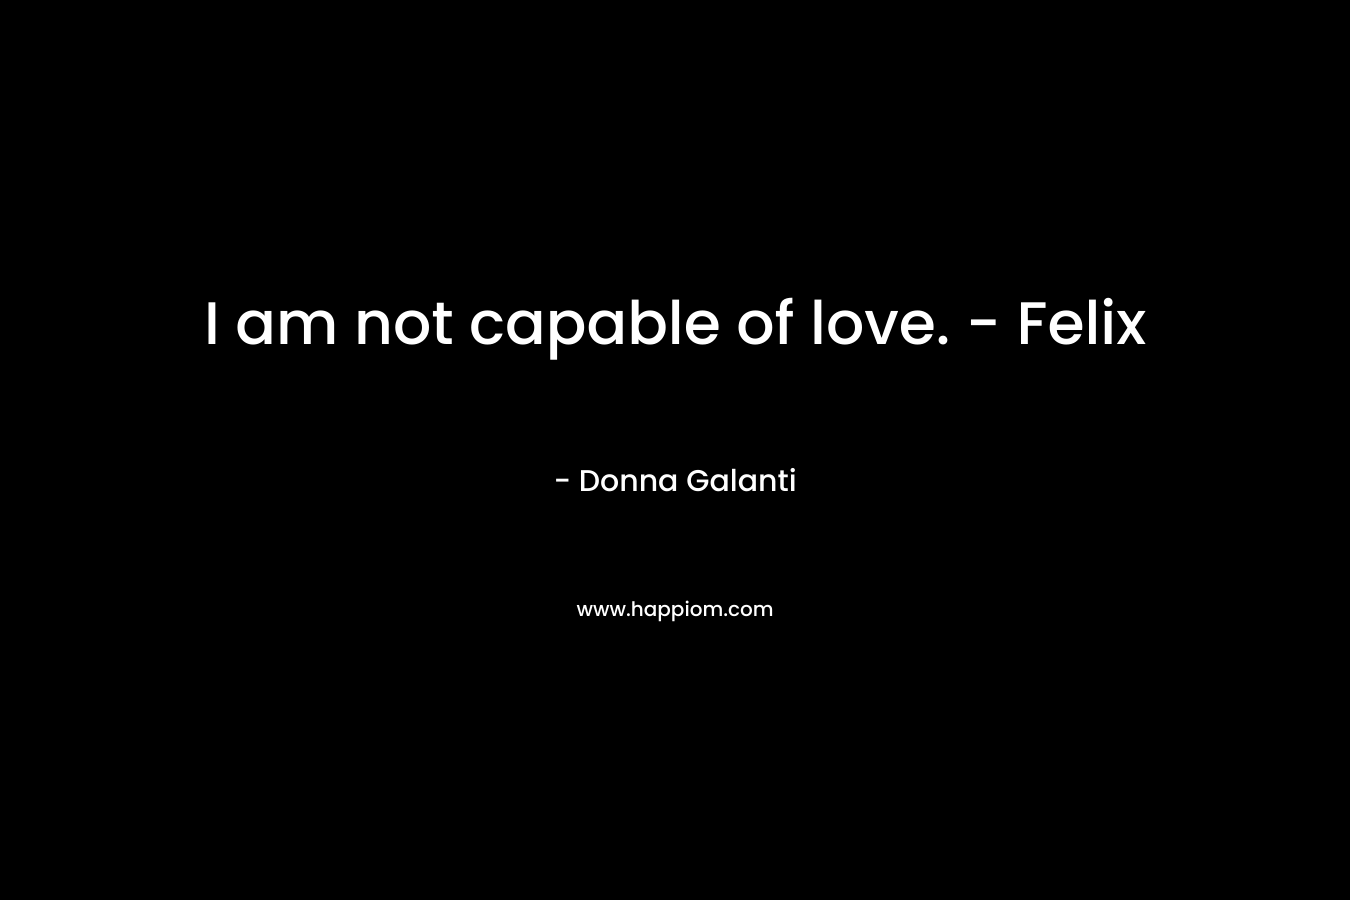 I am not capable of love. - Felix